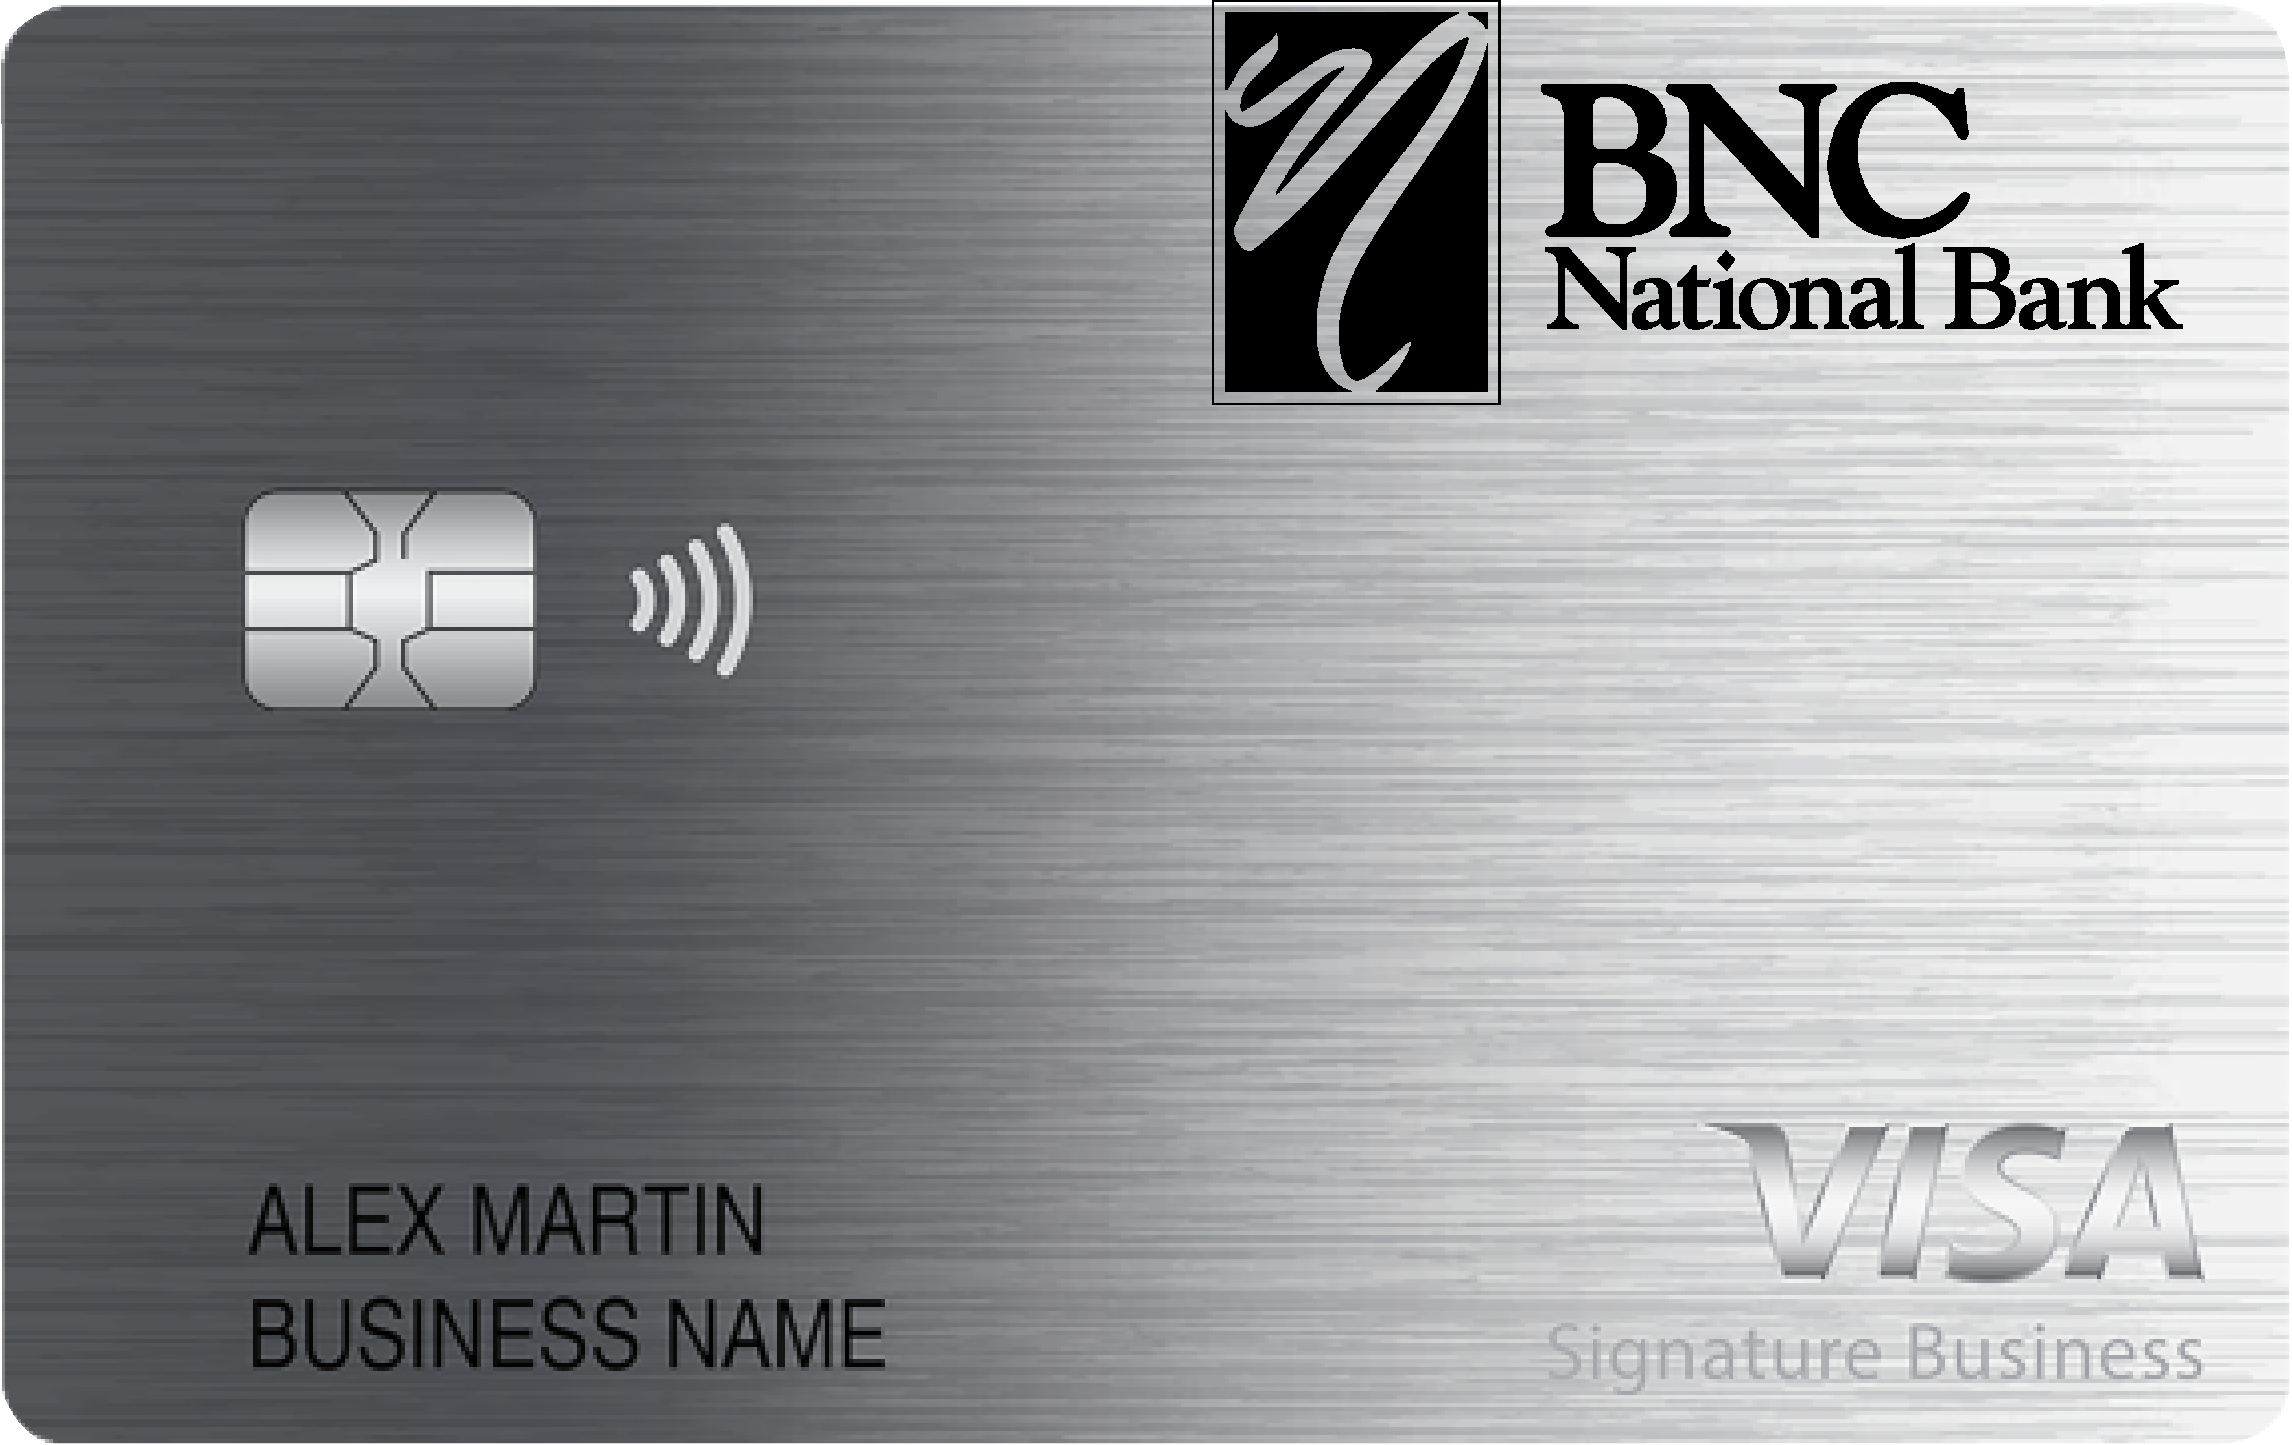 BNC National Bank Smart Business Rewards Card